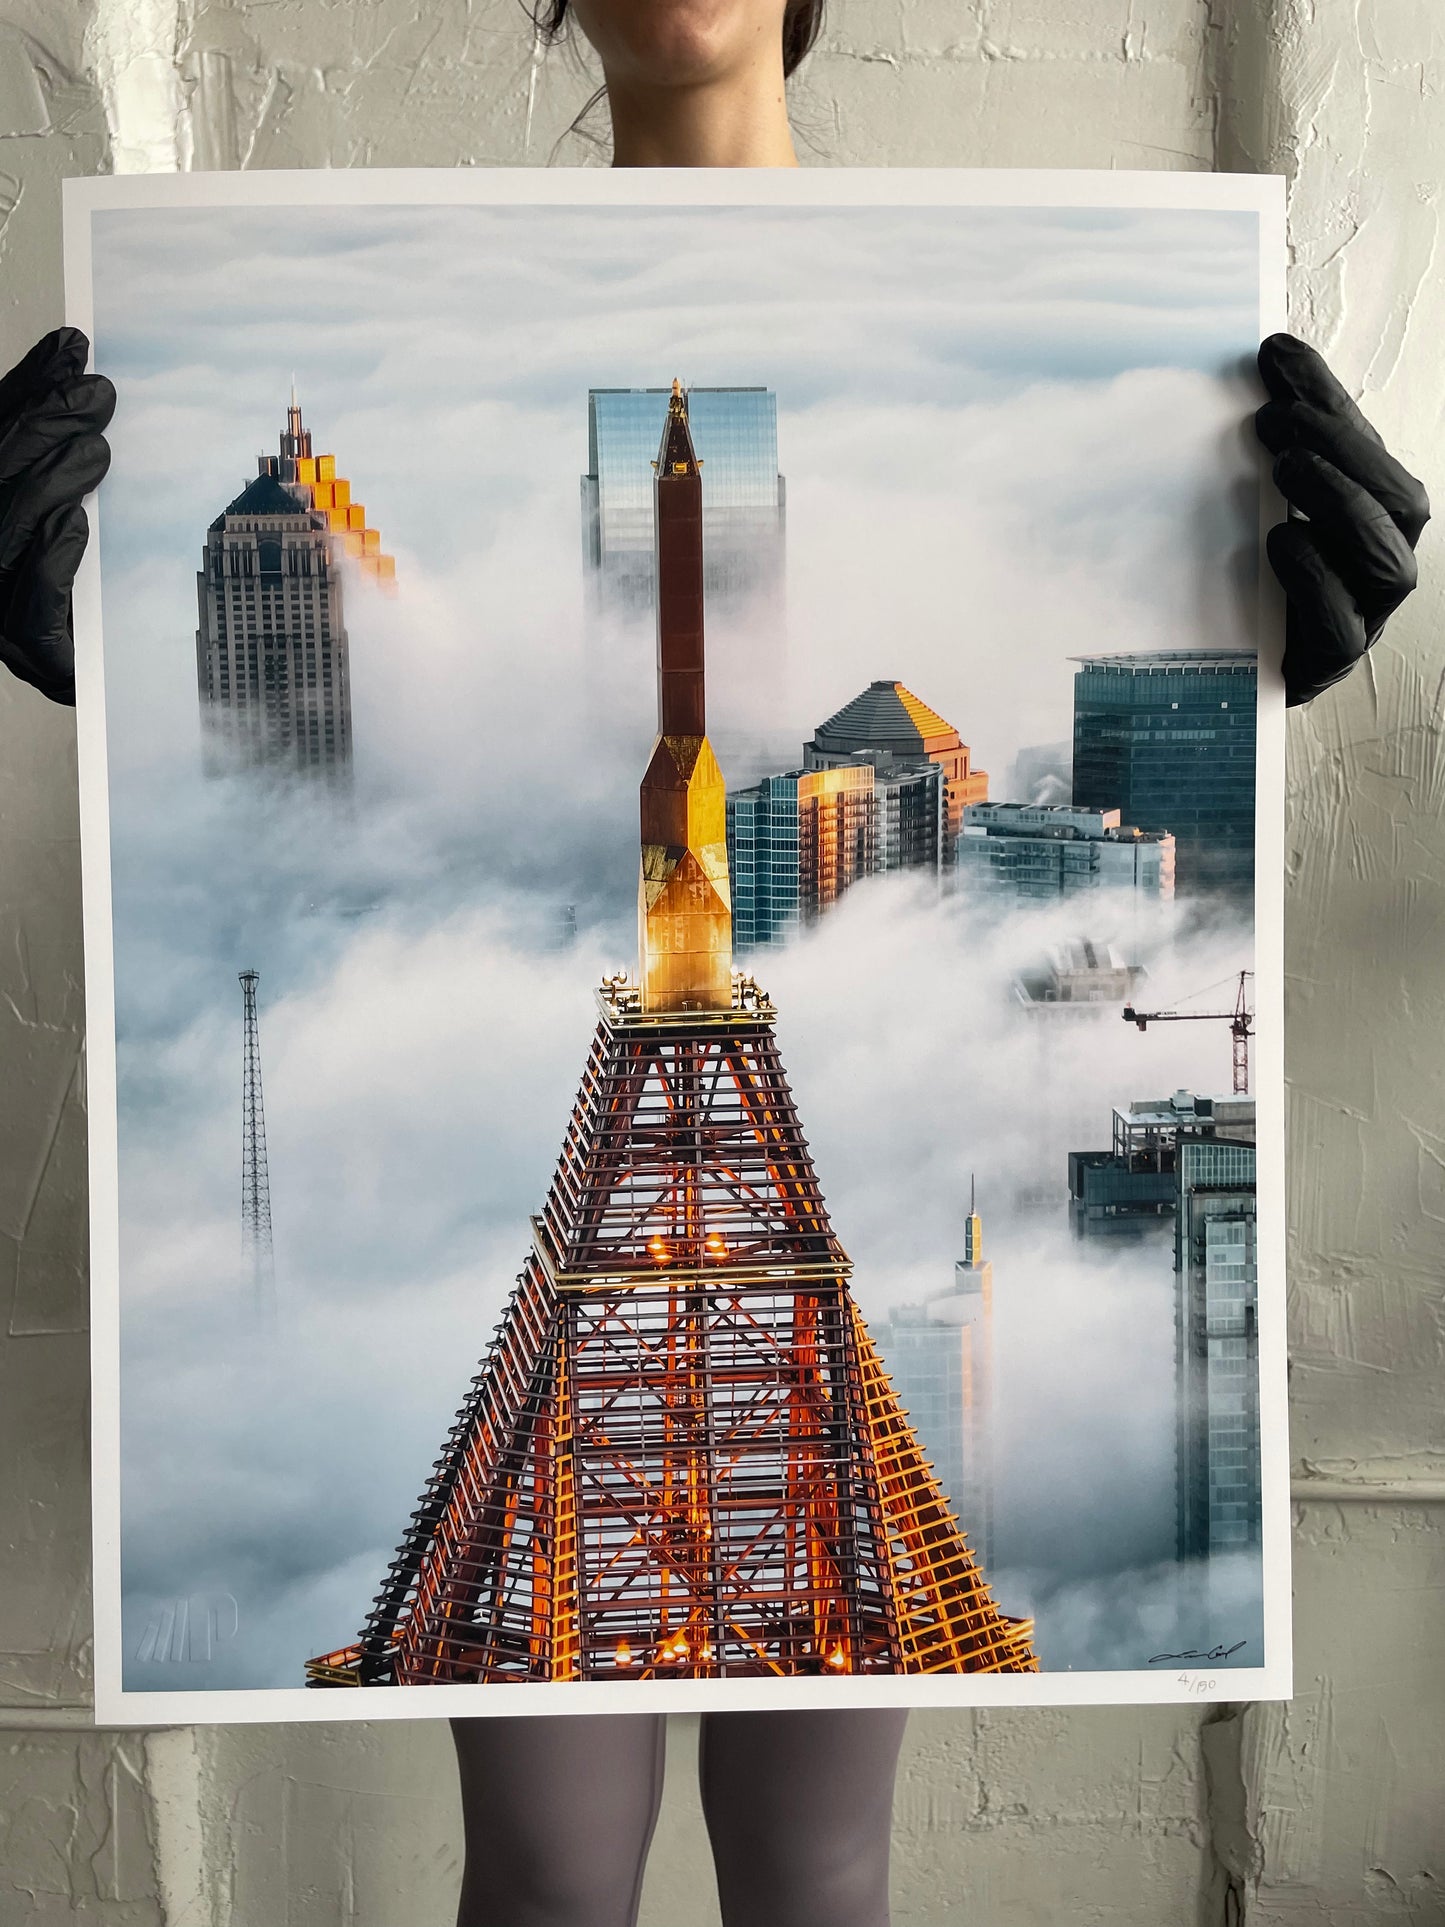 Luis Gaud - "Atlanta in the Clouds"